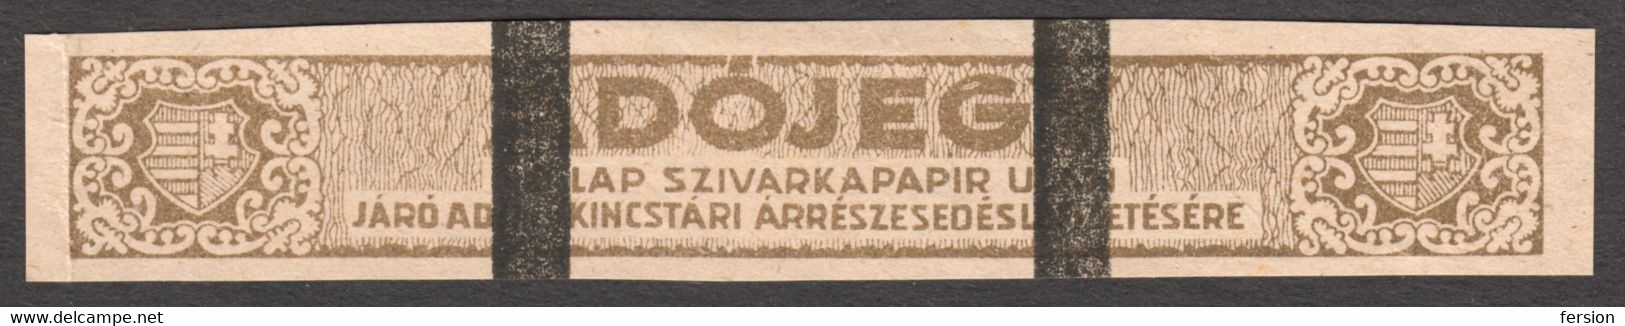 1945 1947 Hungary - Cigarette Paper Seal Stamp / Tobacco - Fiscal Revenue Tax SEAL Stripe - OVERPRINT - Steuermarken